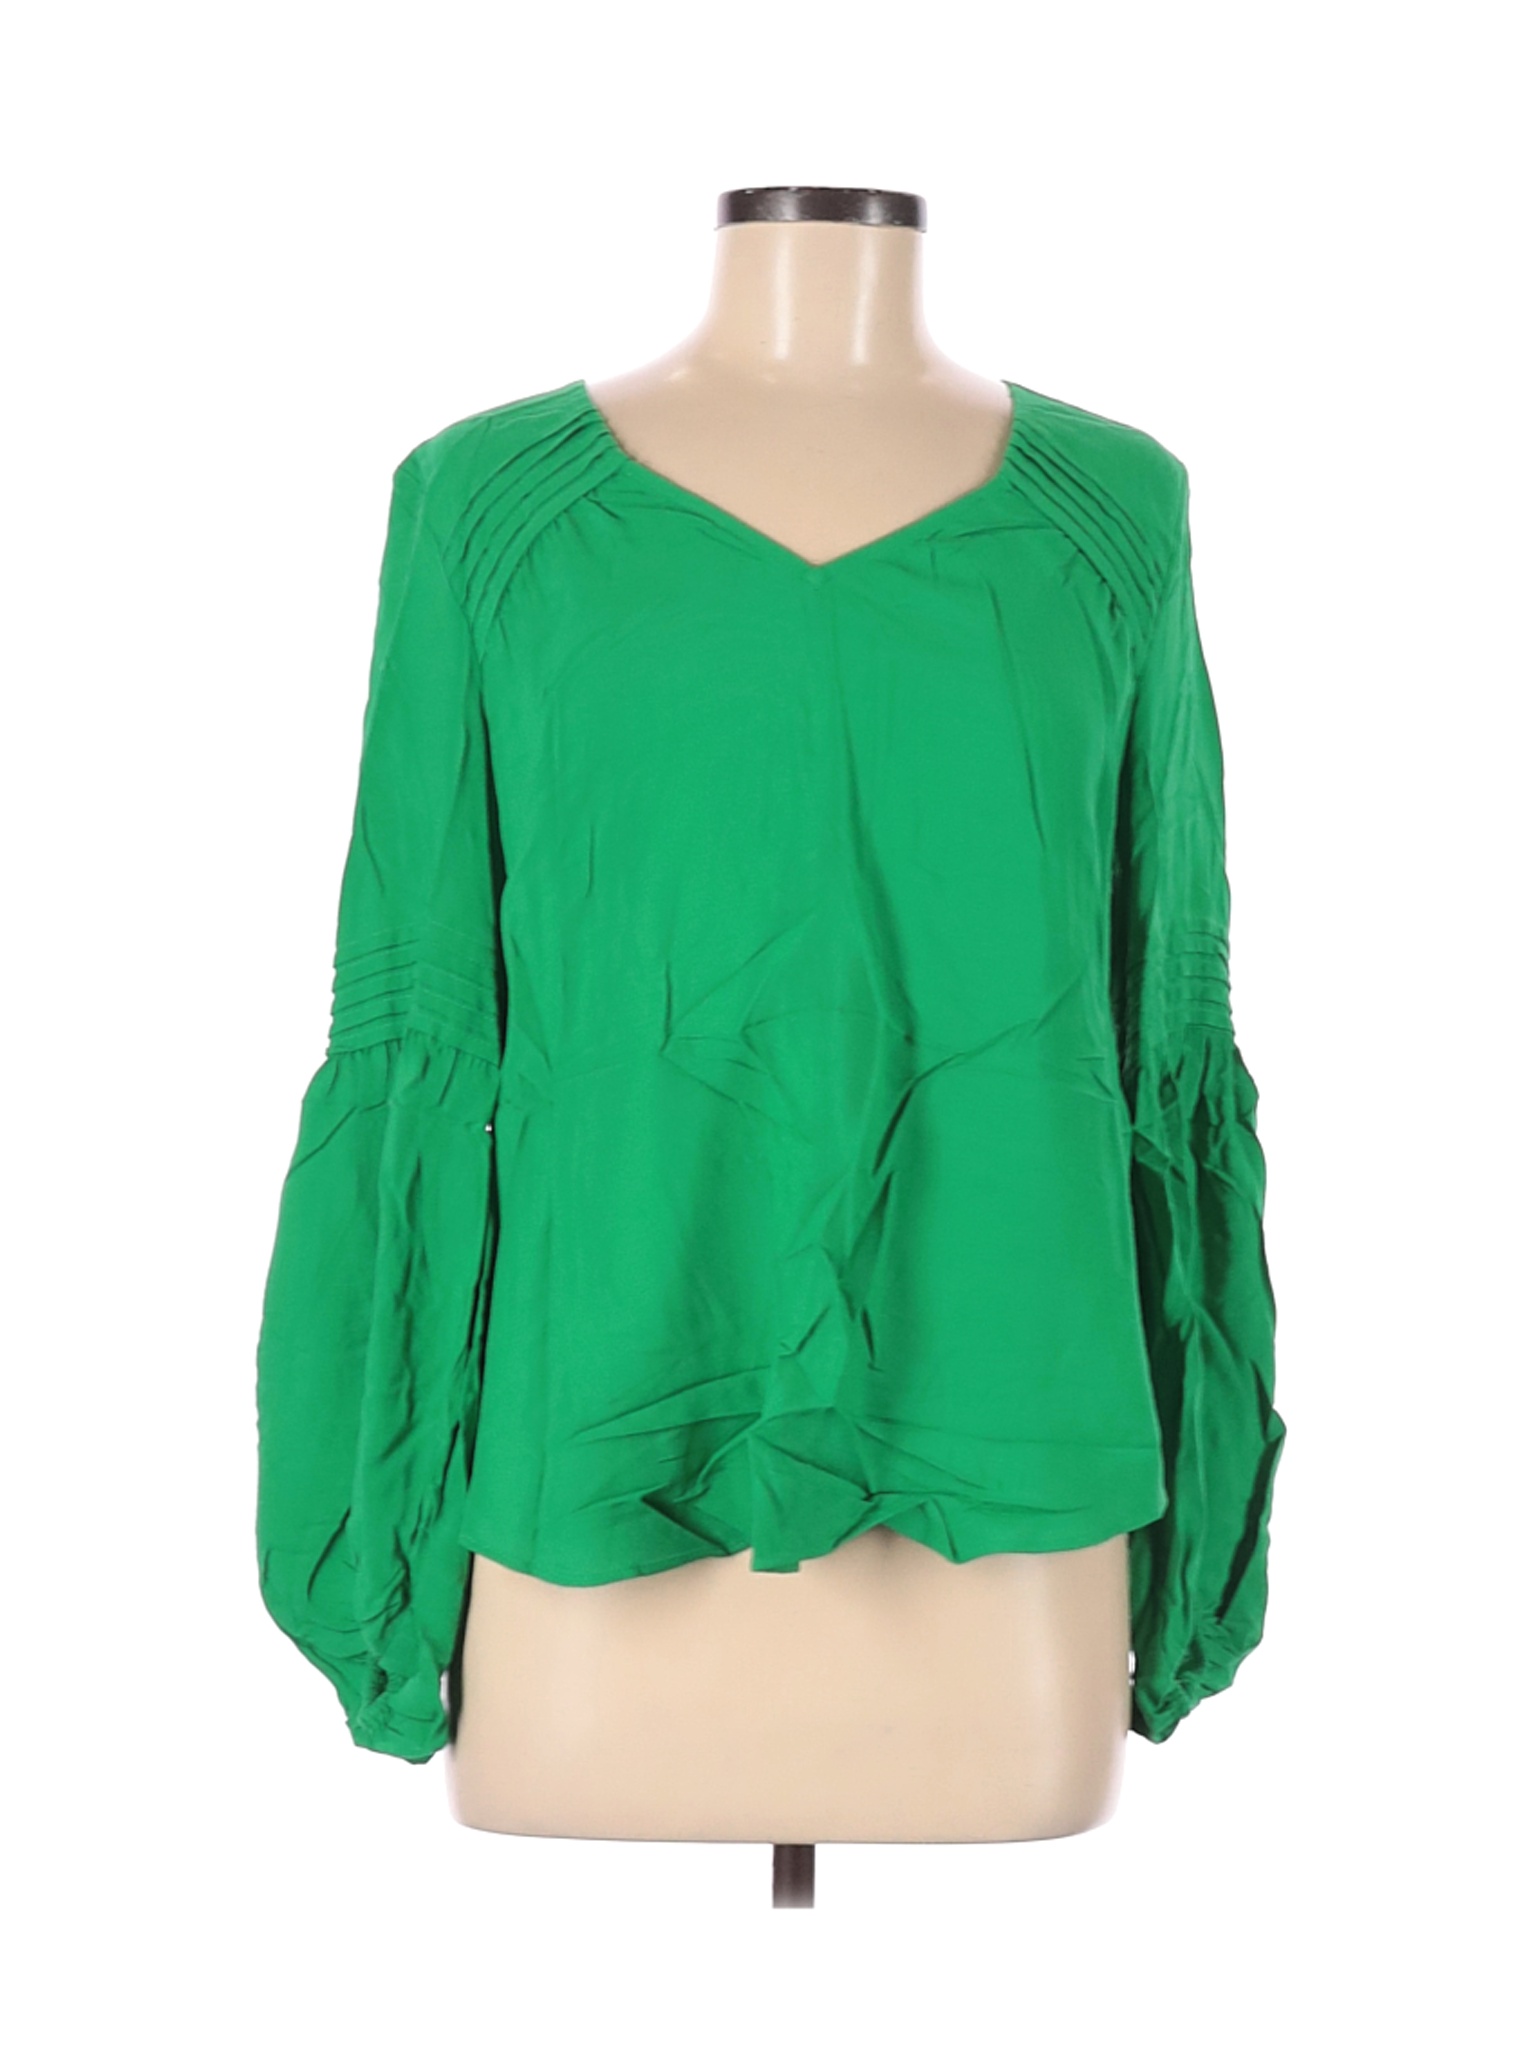 Maeve by Anthropologie Women Green Long Sleeve Blouse XS | eBay